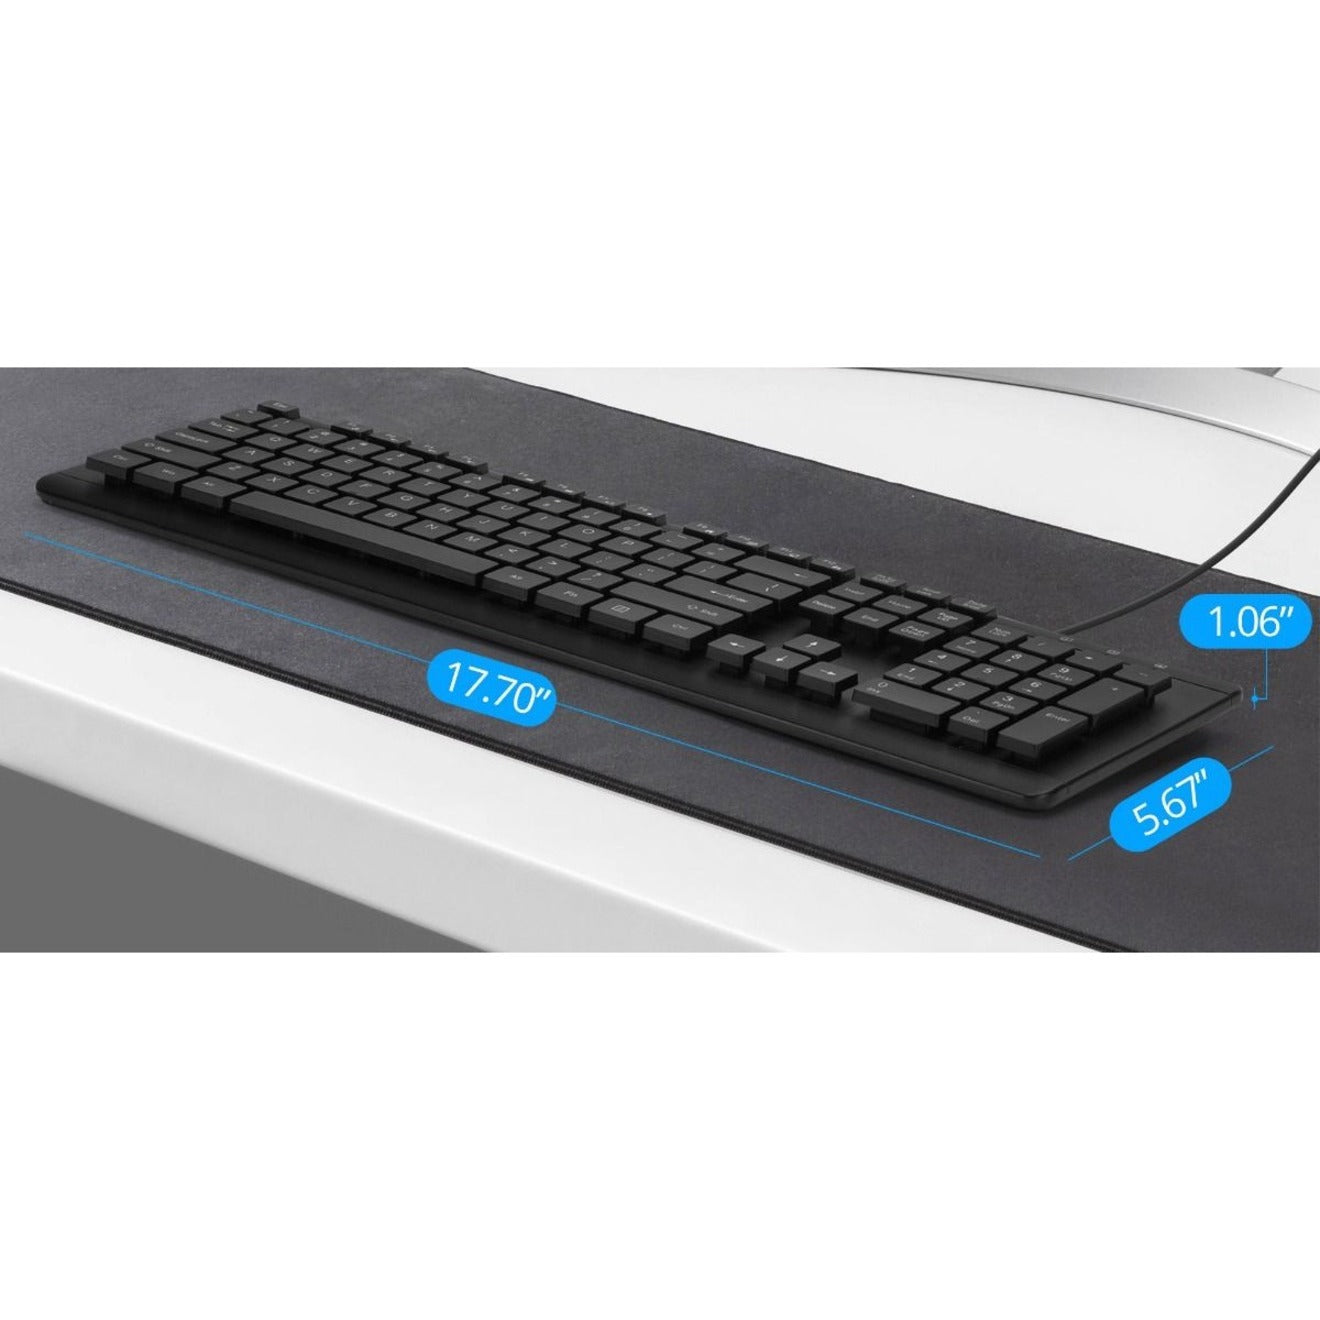 SIIG JK-US0U11-S1 Waterproof & Dustproof USB Multimedia Keyboard, Full-size, Plug and Play, Quiet Keys, Non-slip